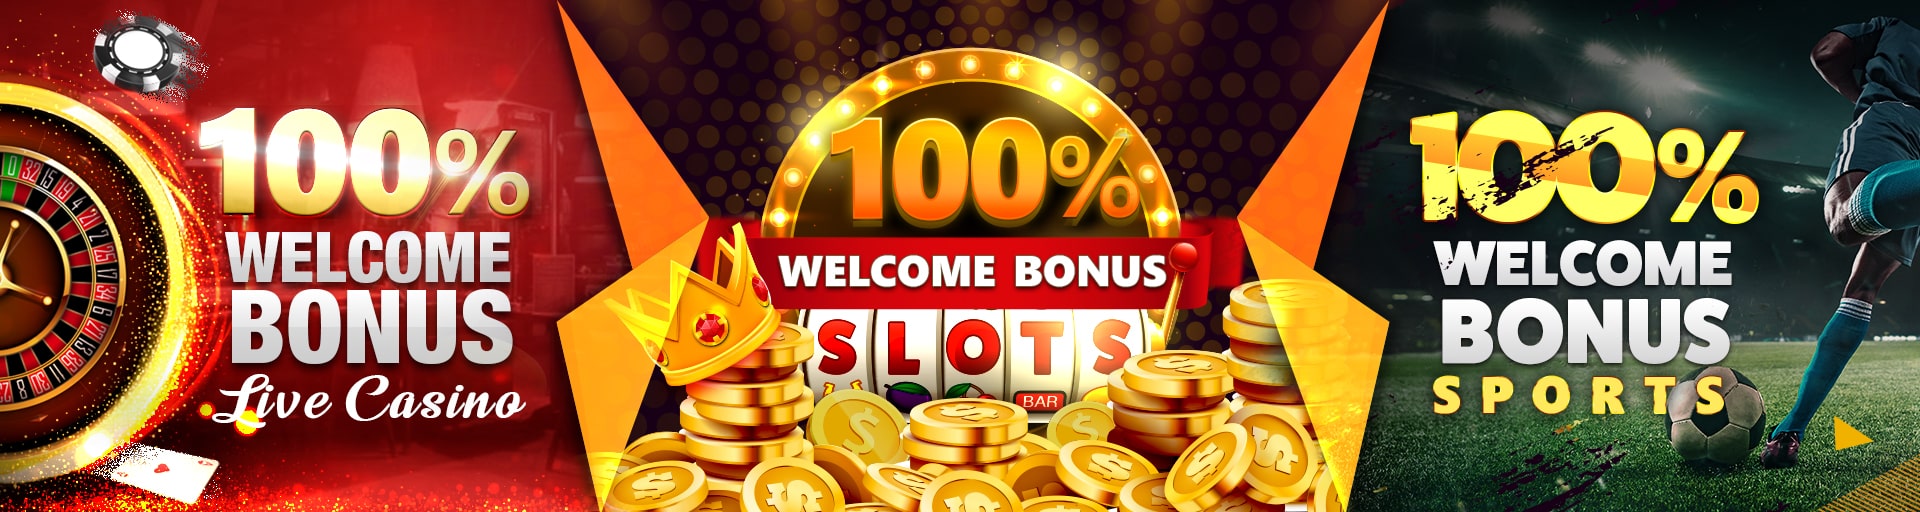 100% Welcome Bonus Sports